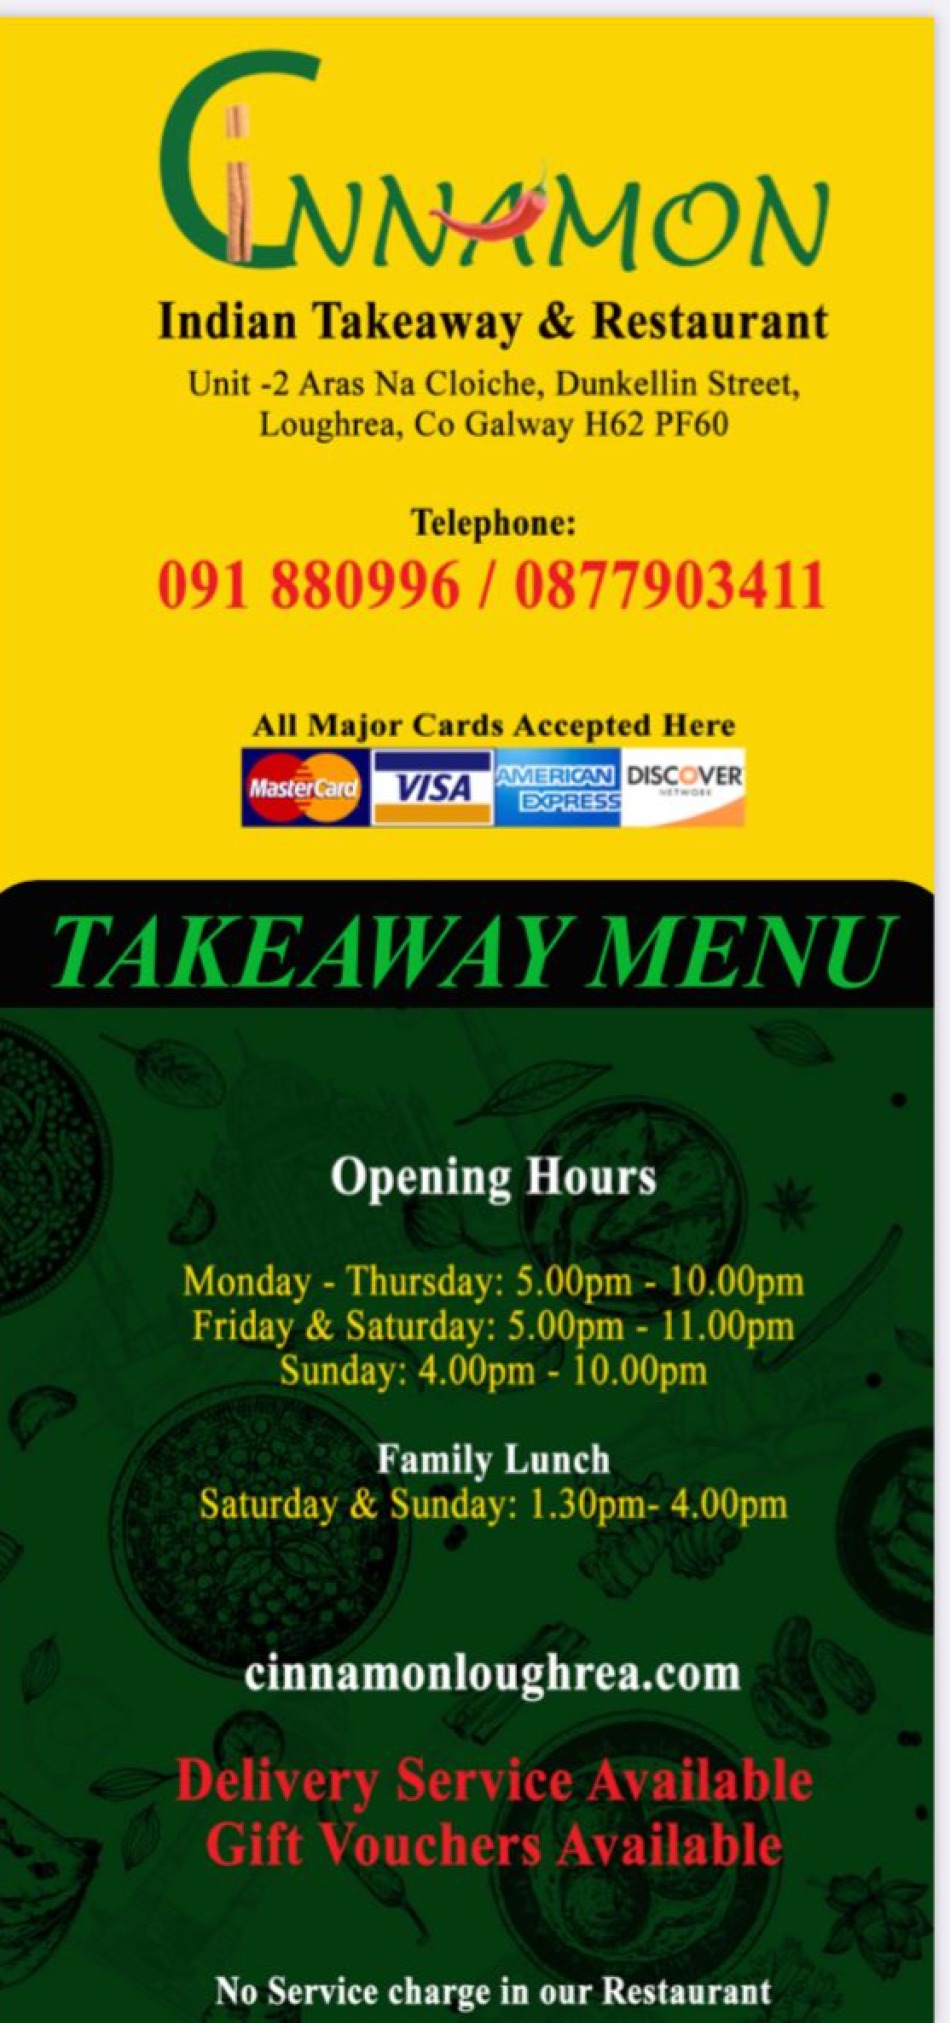 Takeaway Restaurant Menu Page - Cinnamon indian restaurant - Loughrea